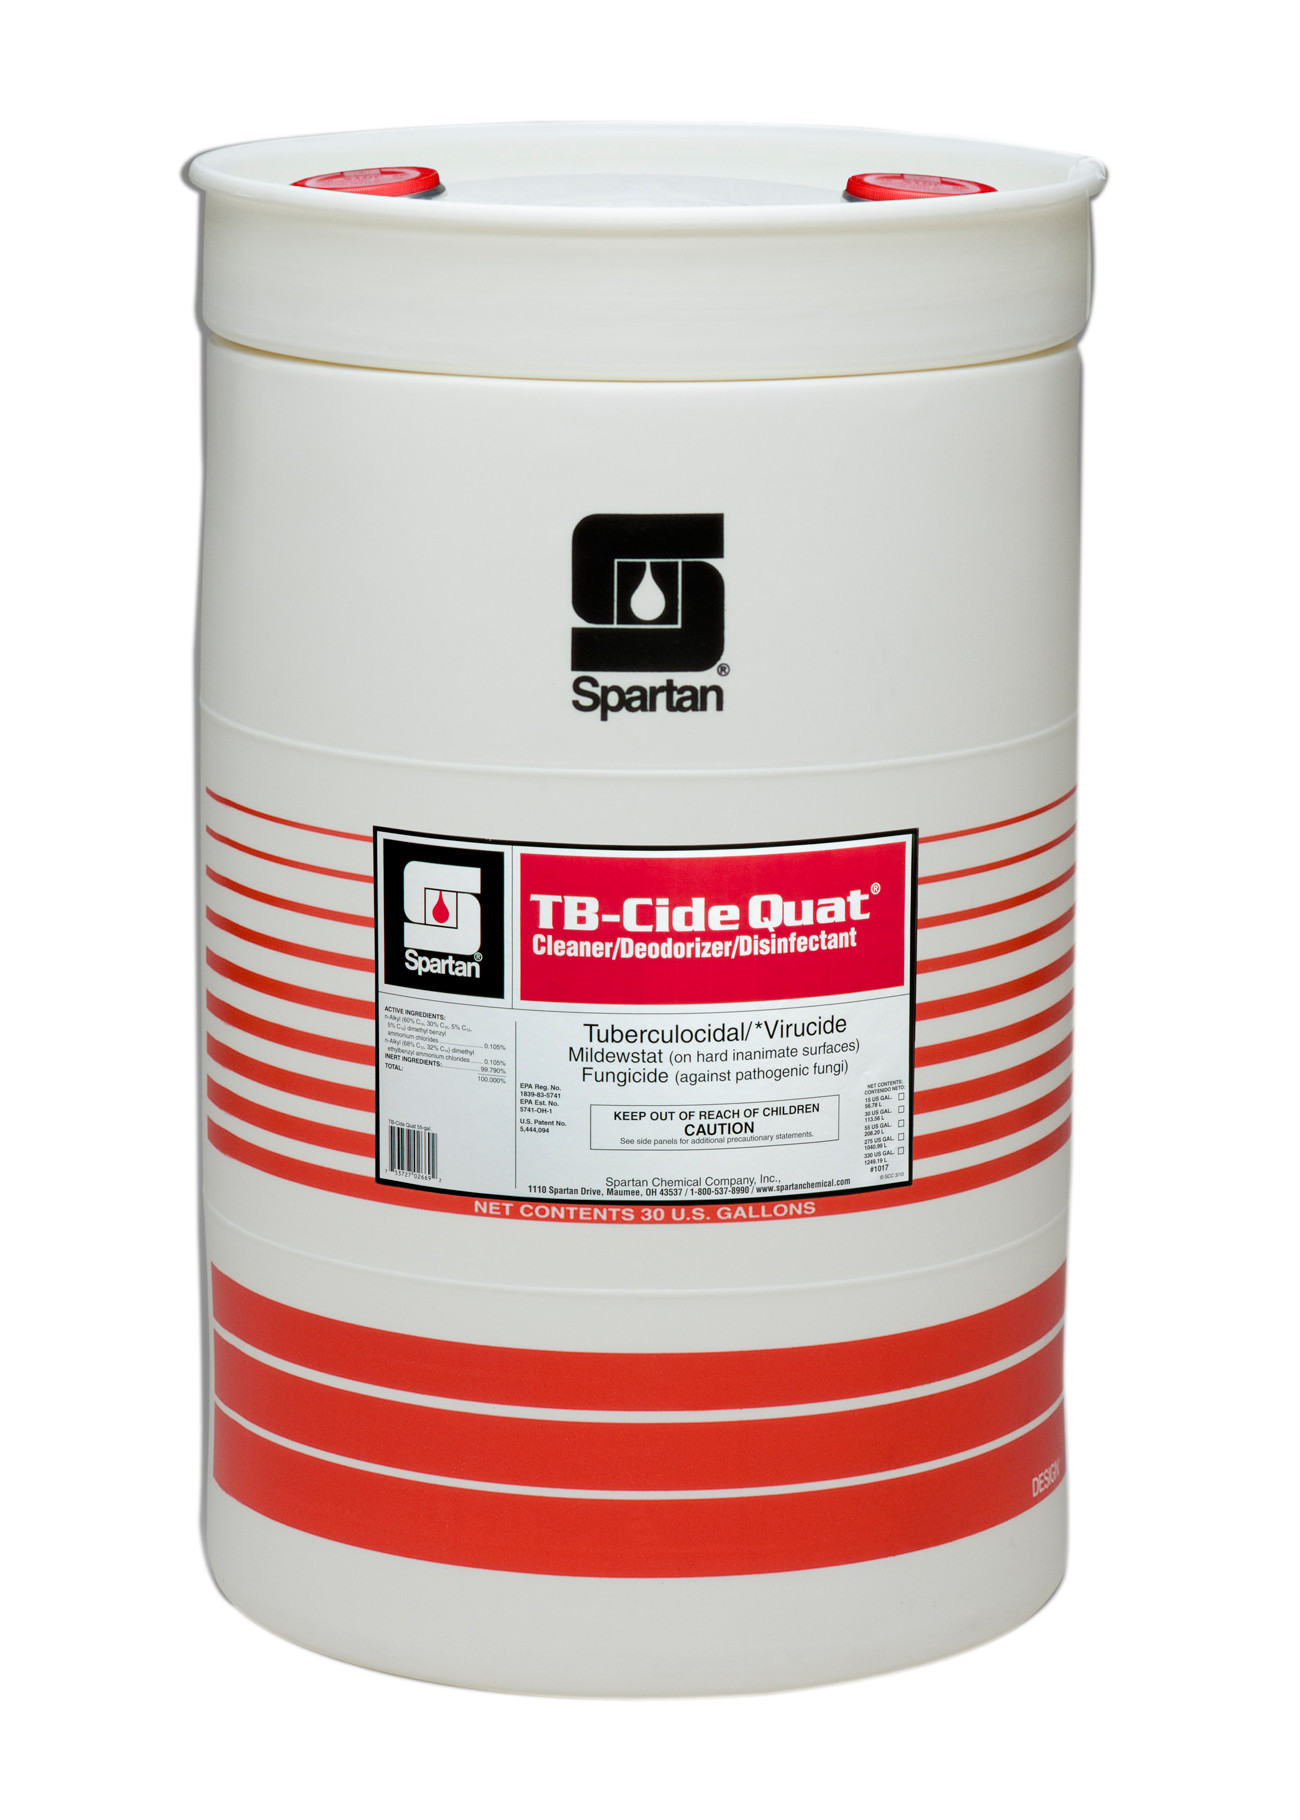 Spartan Chemical Company TB-Cide Quat, 30 GAL DRUM